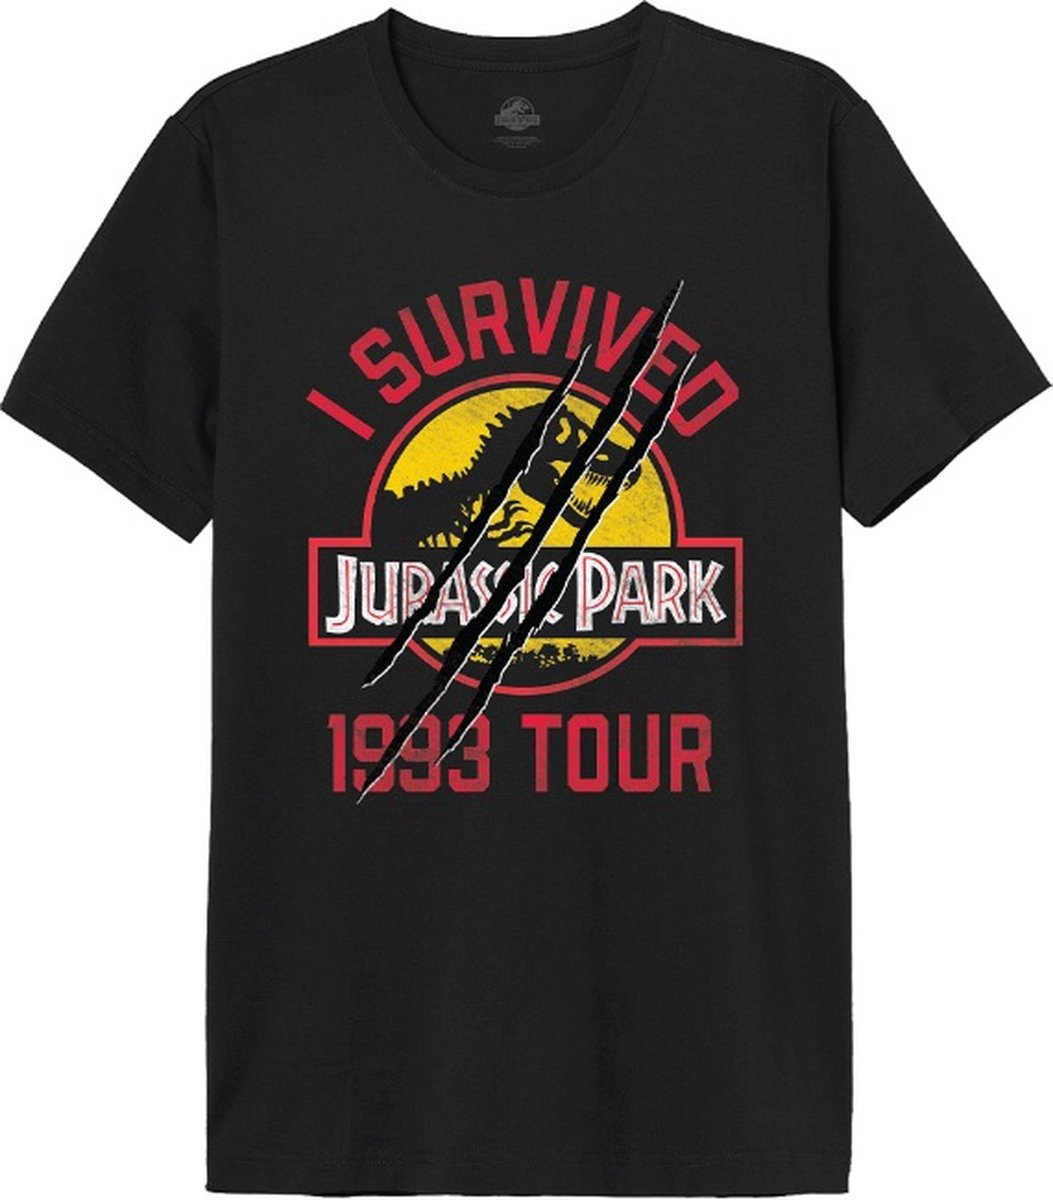 JURASSIC PARK - I SURVIVED 1993 TOUR - T-SHIRT (L)